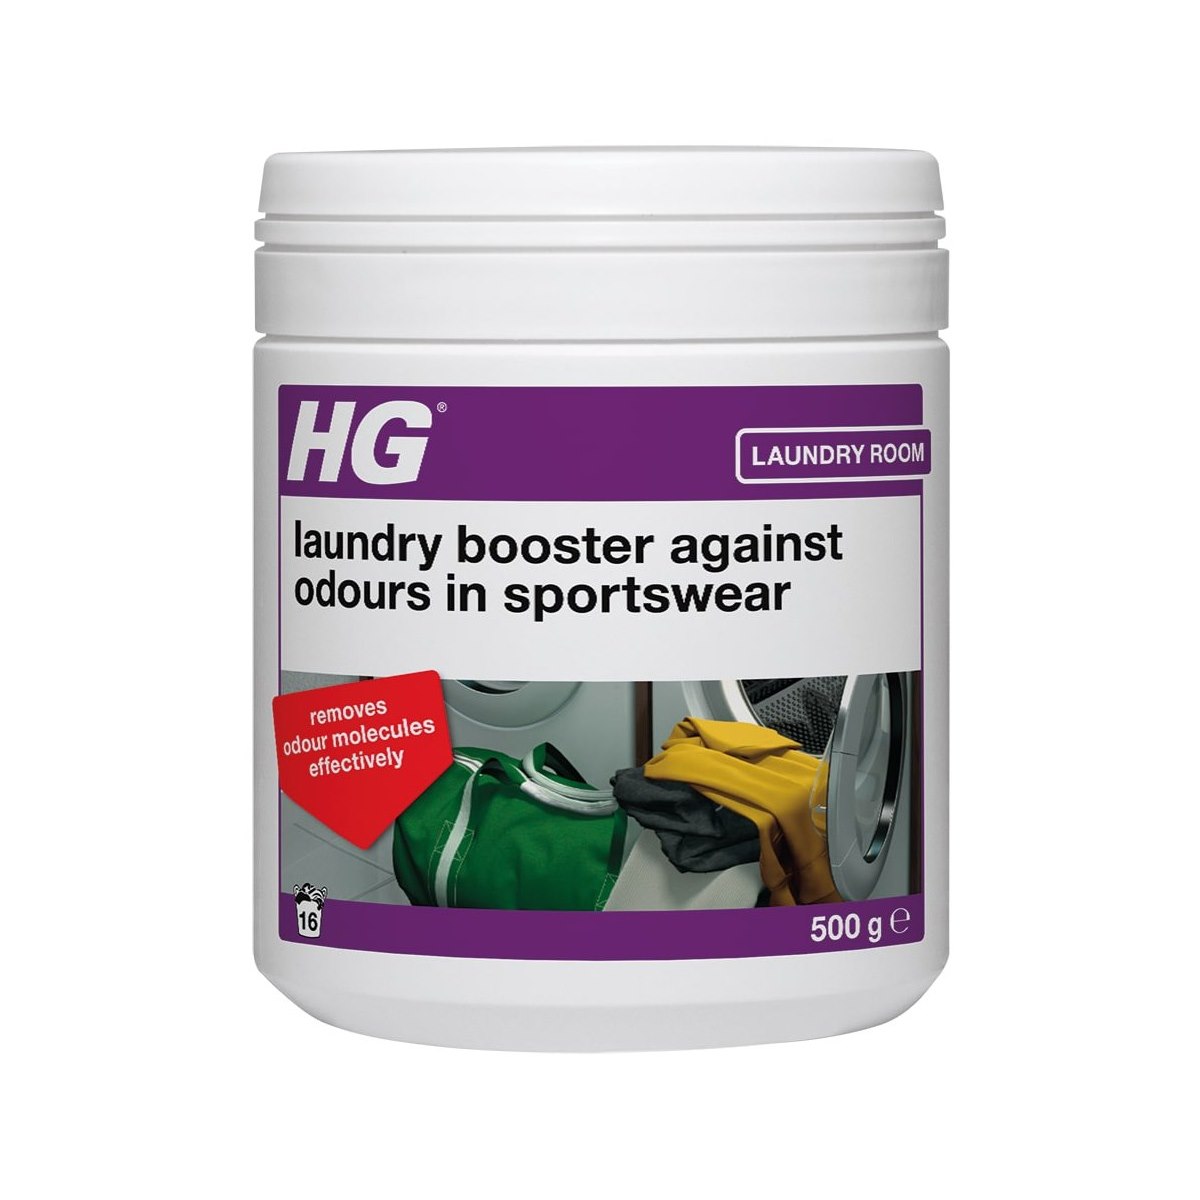 HG Laundry Booster Against Odours in Sportswear 500g